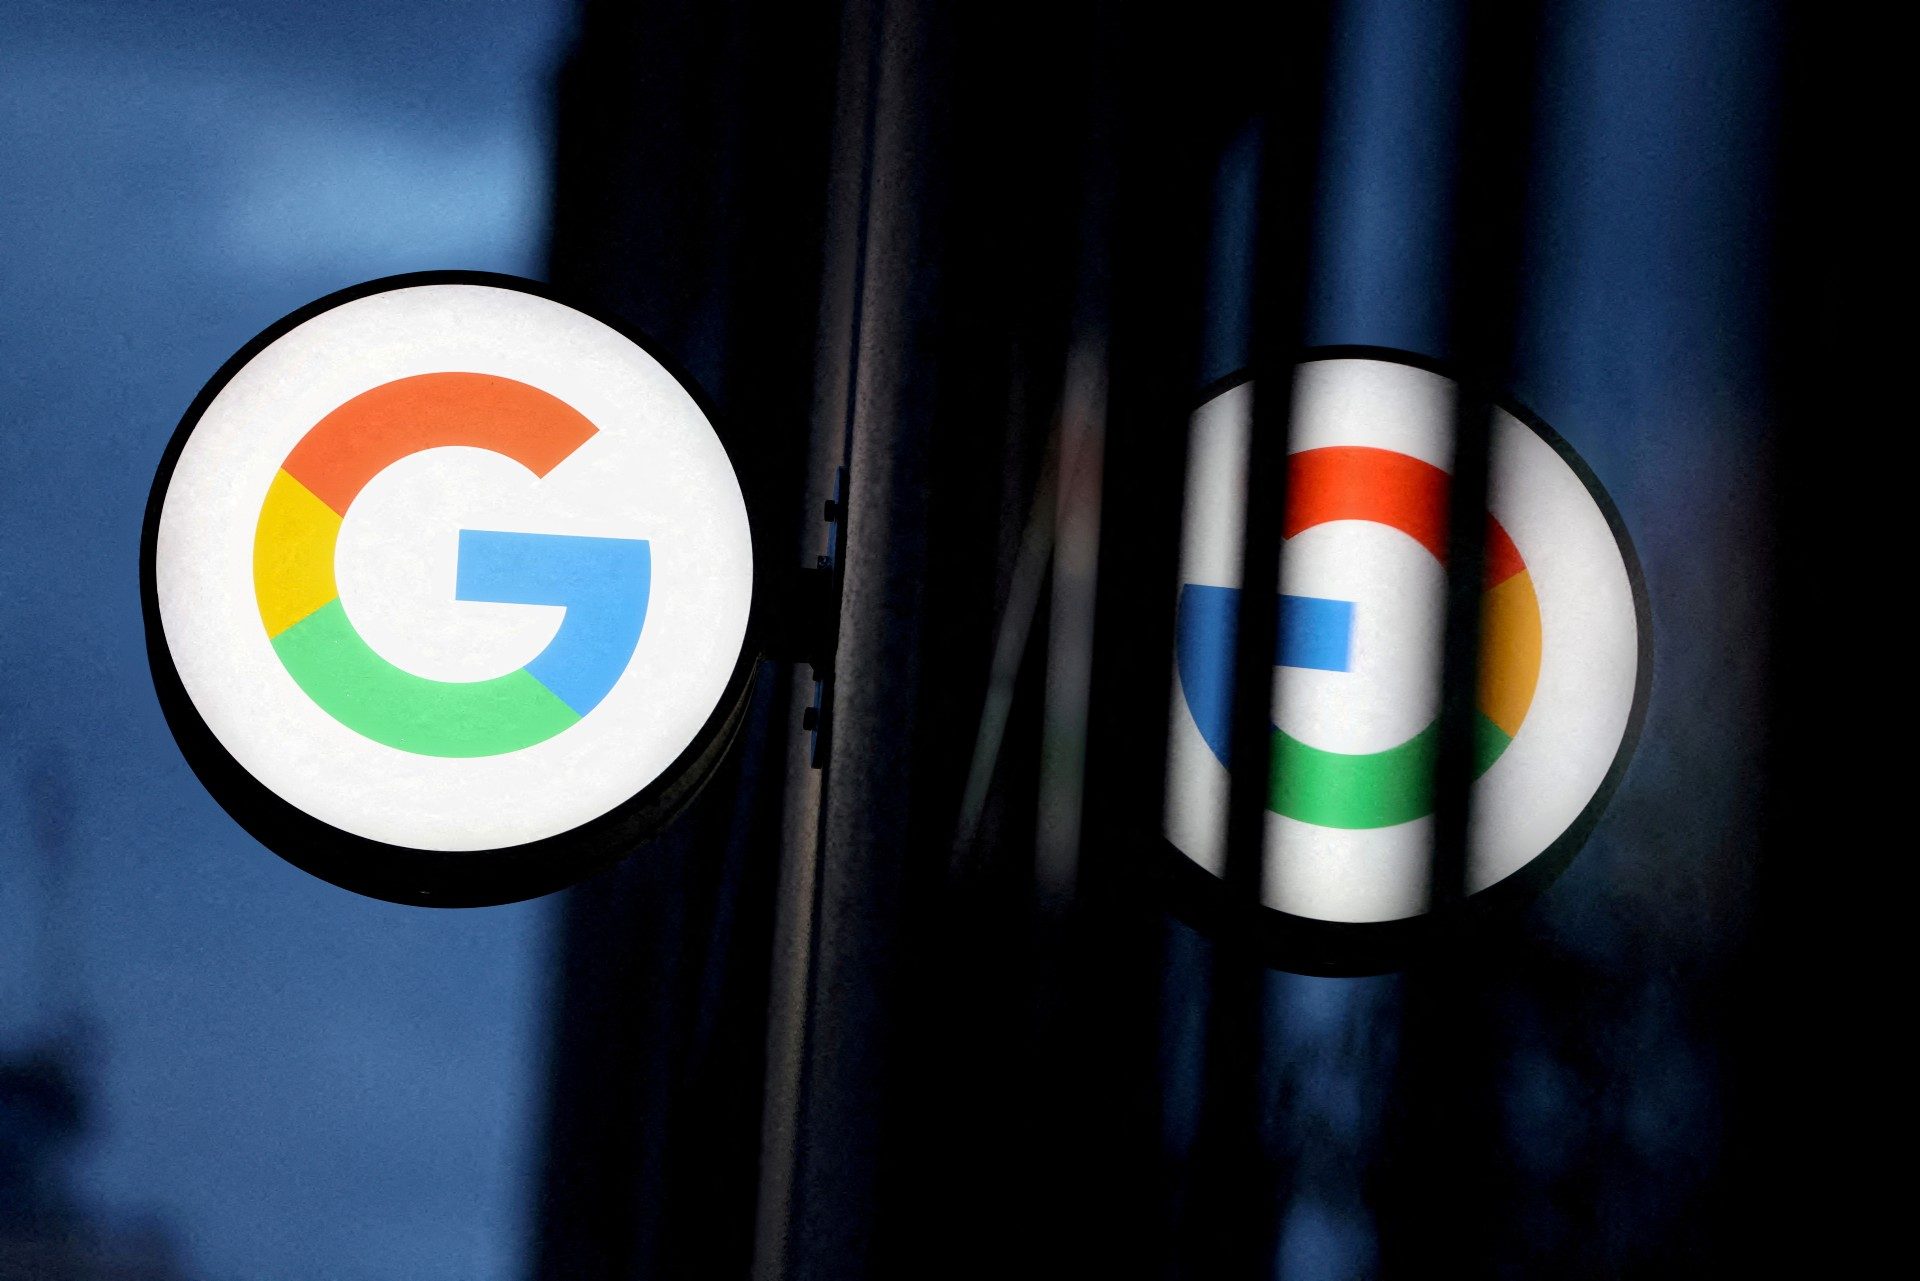 Scores of Google rivals want EU tech law used in antitrust case – letter